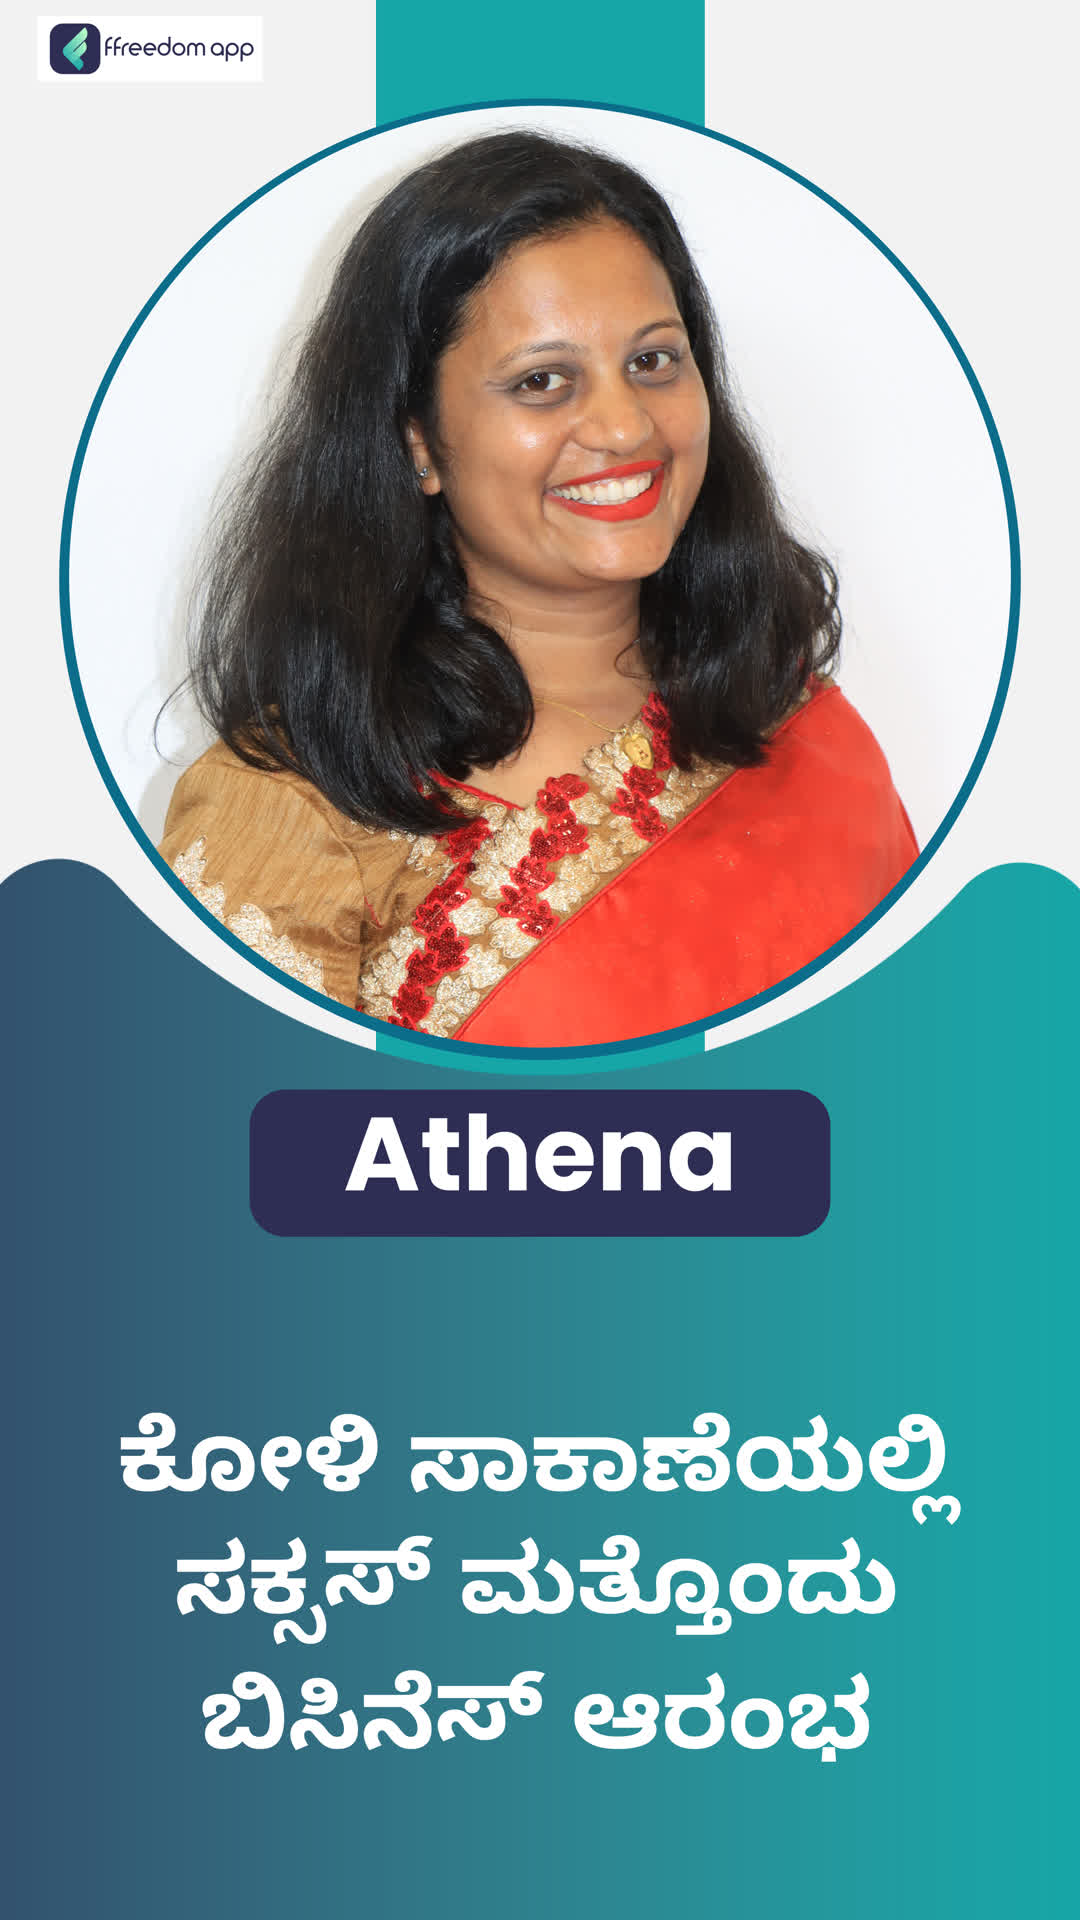 Asha's Honest Review of ffreedom app - Idukki ,Kerala